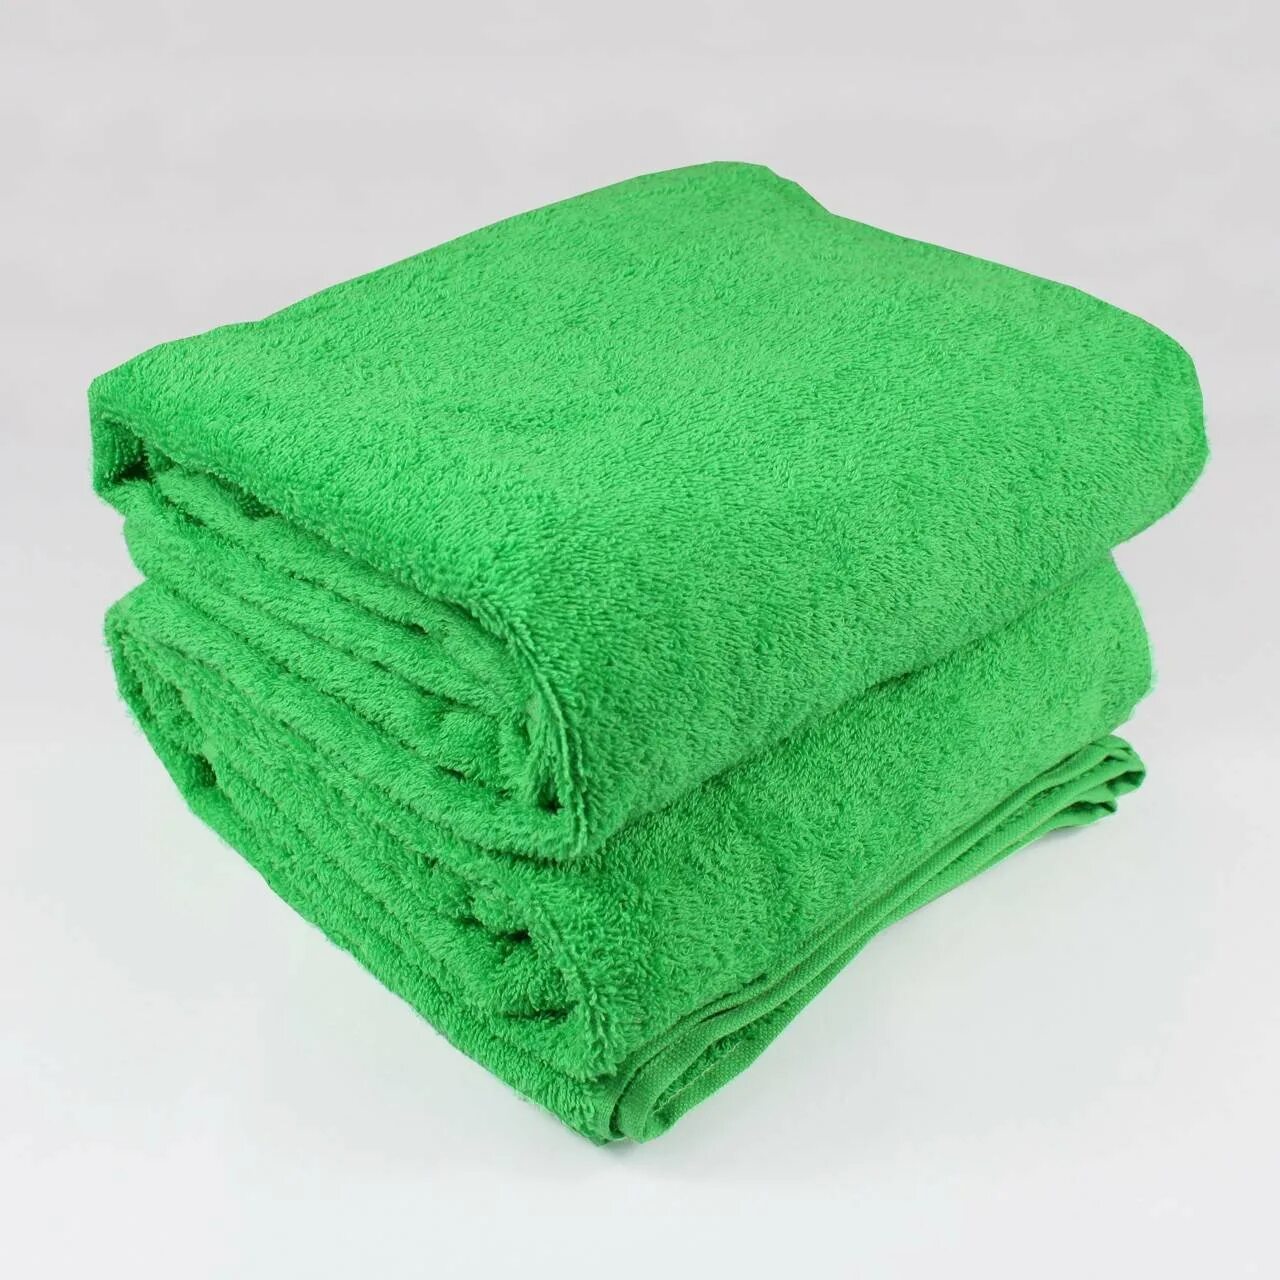 Полотенца плюс. Зеленое полотенце. Полотенце махровое зеленый. Полотенце темно зеленое махровое. Стопка махровых полотенец зеленые салатовые.